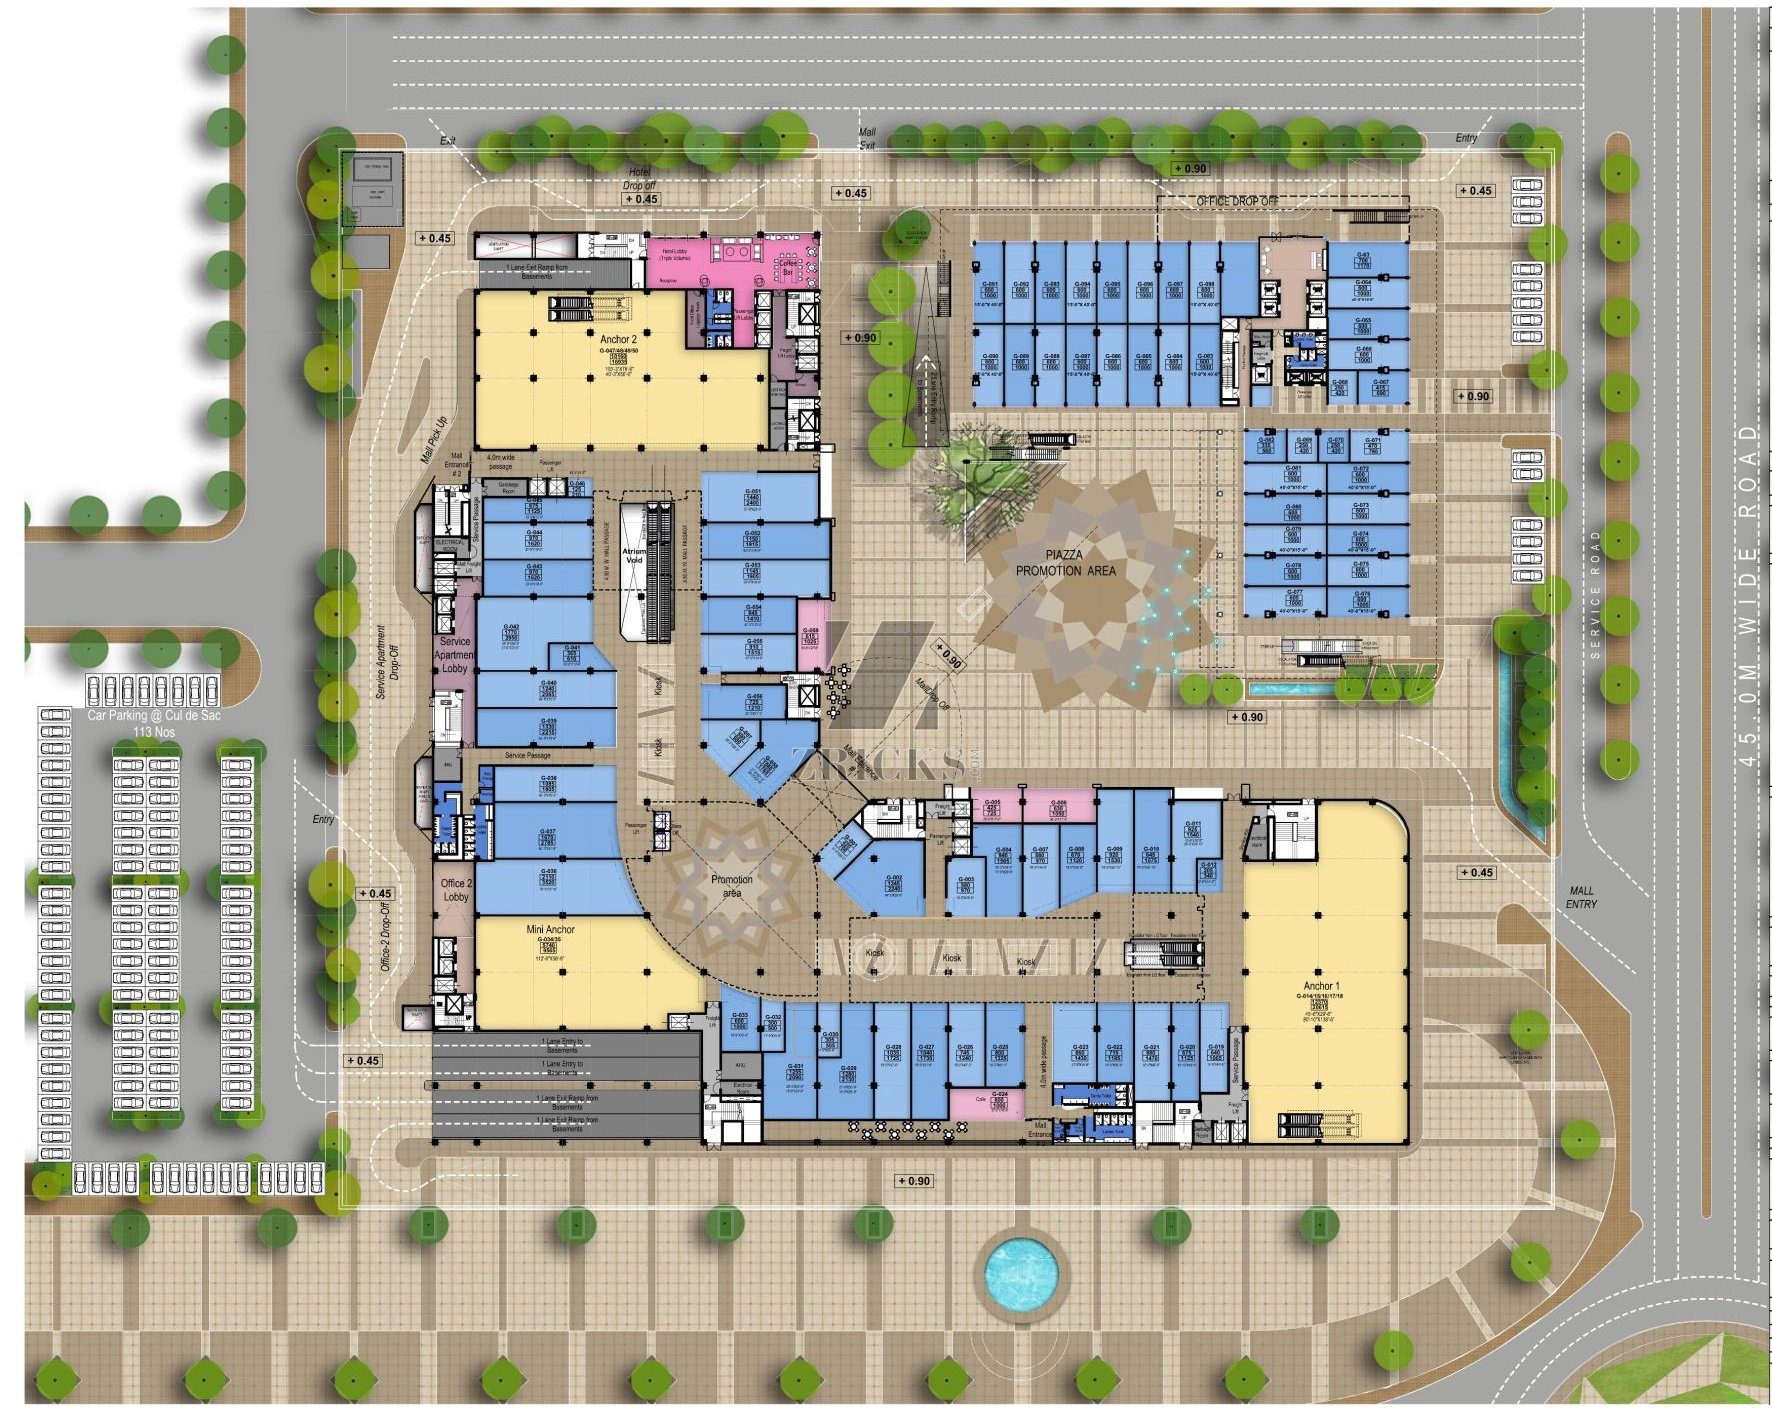 Pratham Vegas Mall Floor Plan